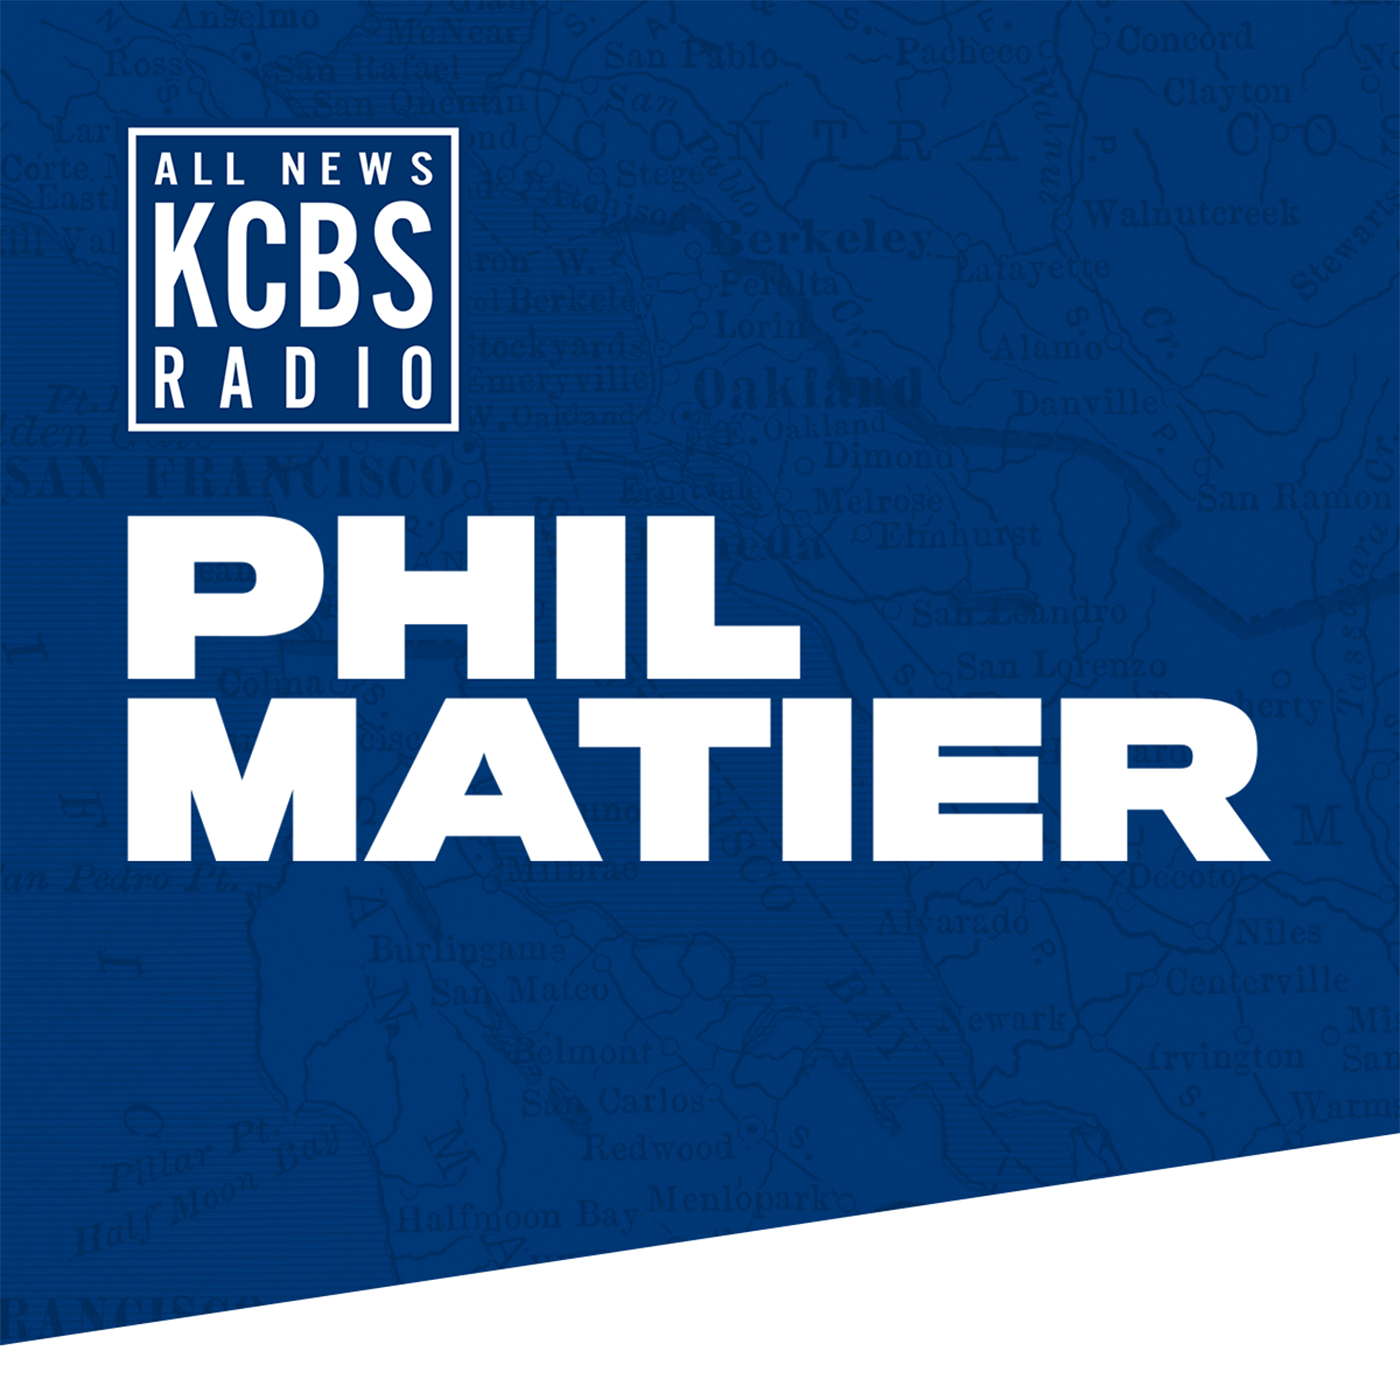 Phil Matier:  Battle over unofficial ballot boxes in California